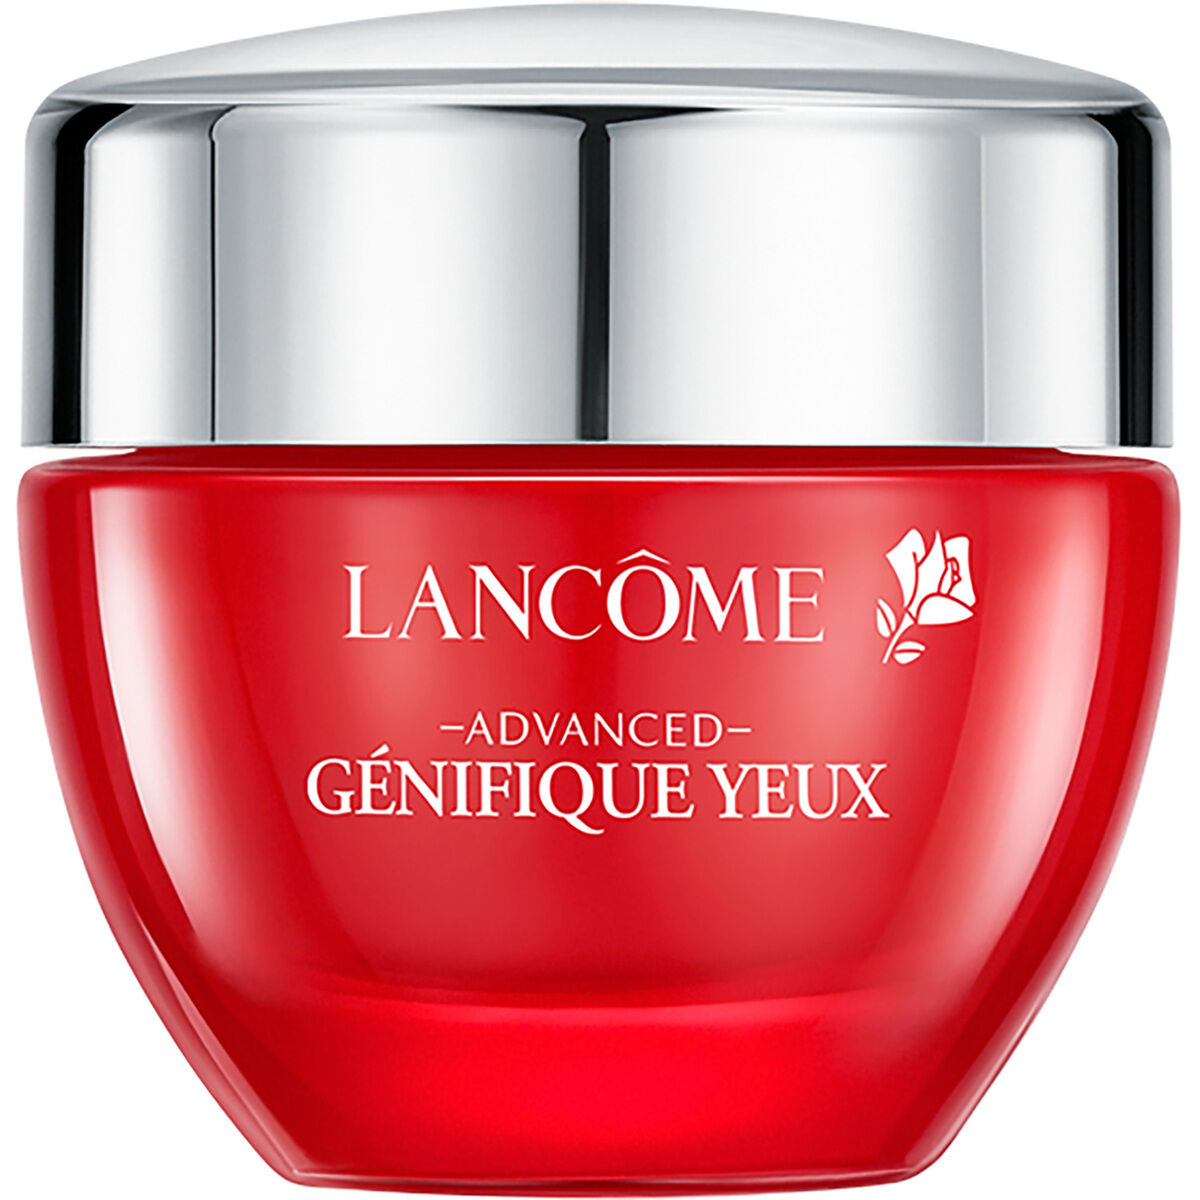 Lancome Advanced Génifique Yeux Eye Creme 15ml - Chinese New Year Edition